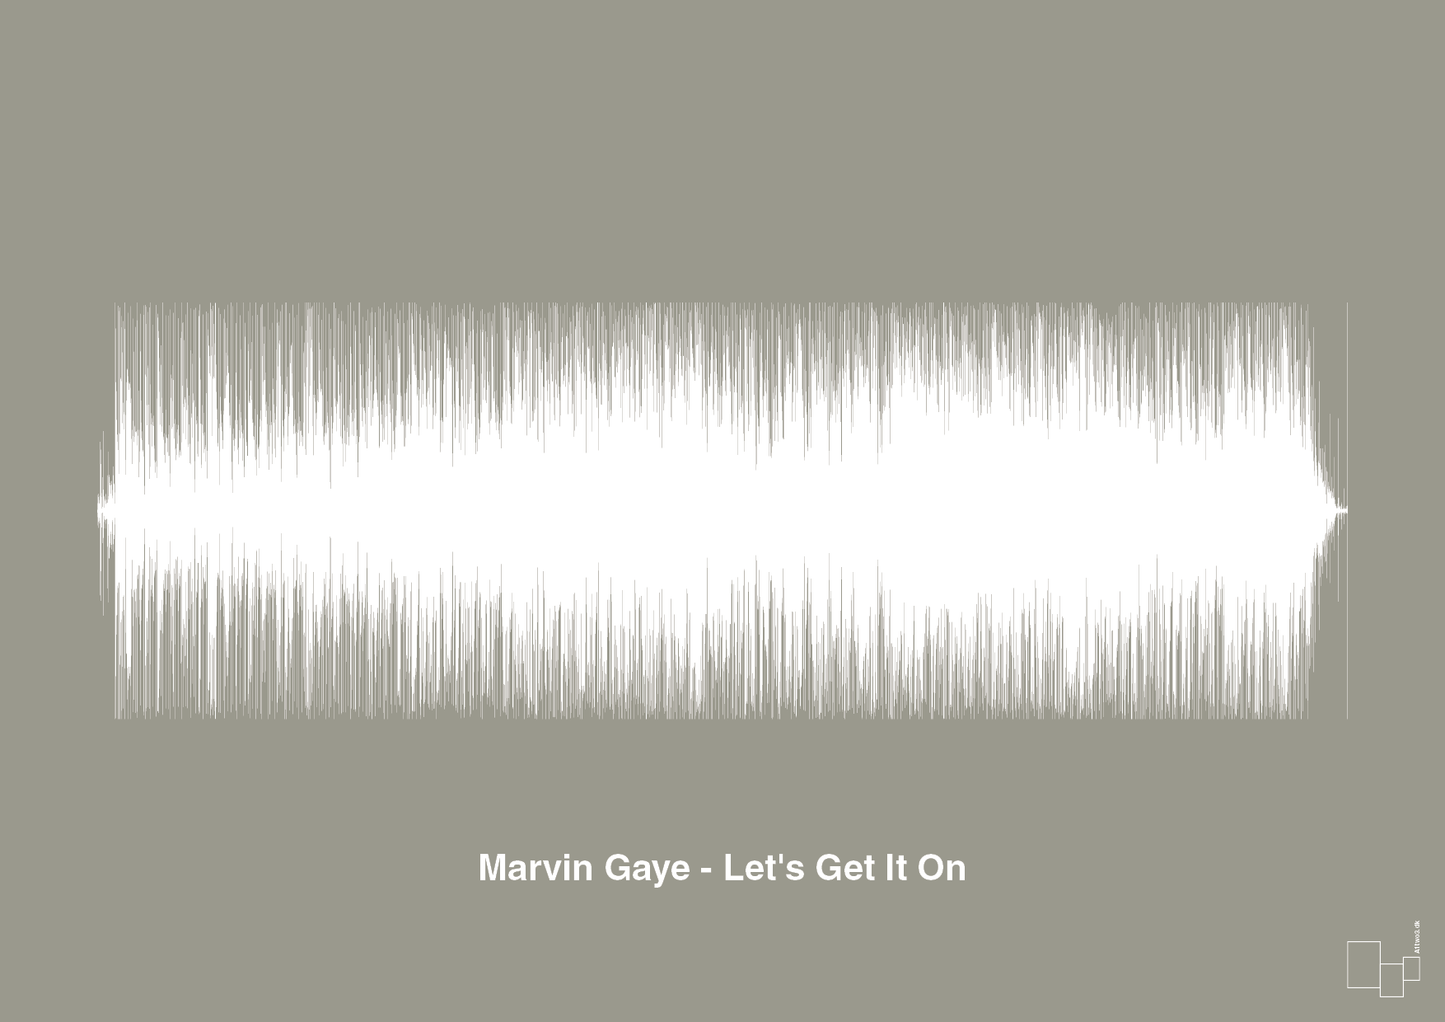 marvin gaye - let's get it on - Plakat med Musik i Battleship Gray